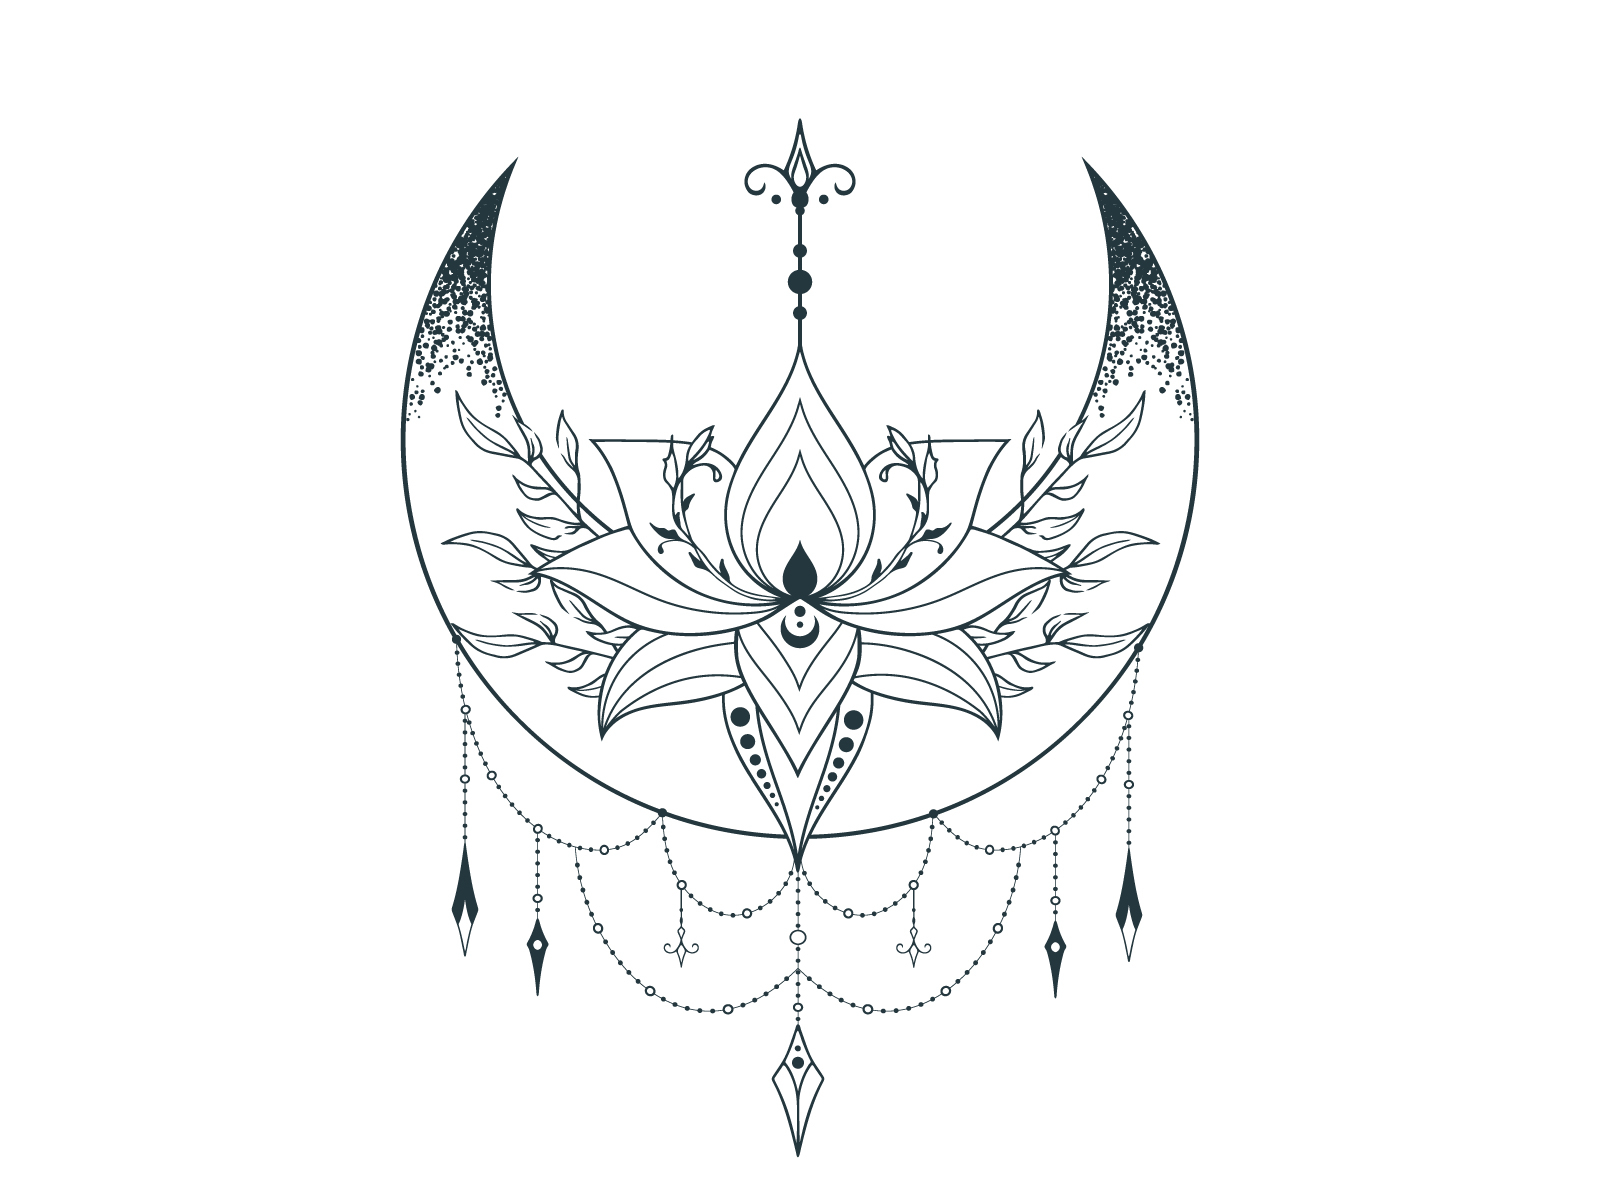 1. Moonflower Lotus Moon Tattoo Designs - wide 6